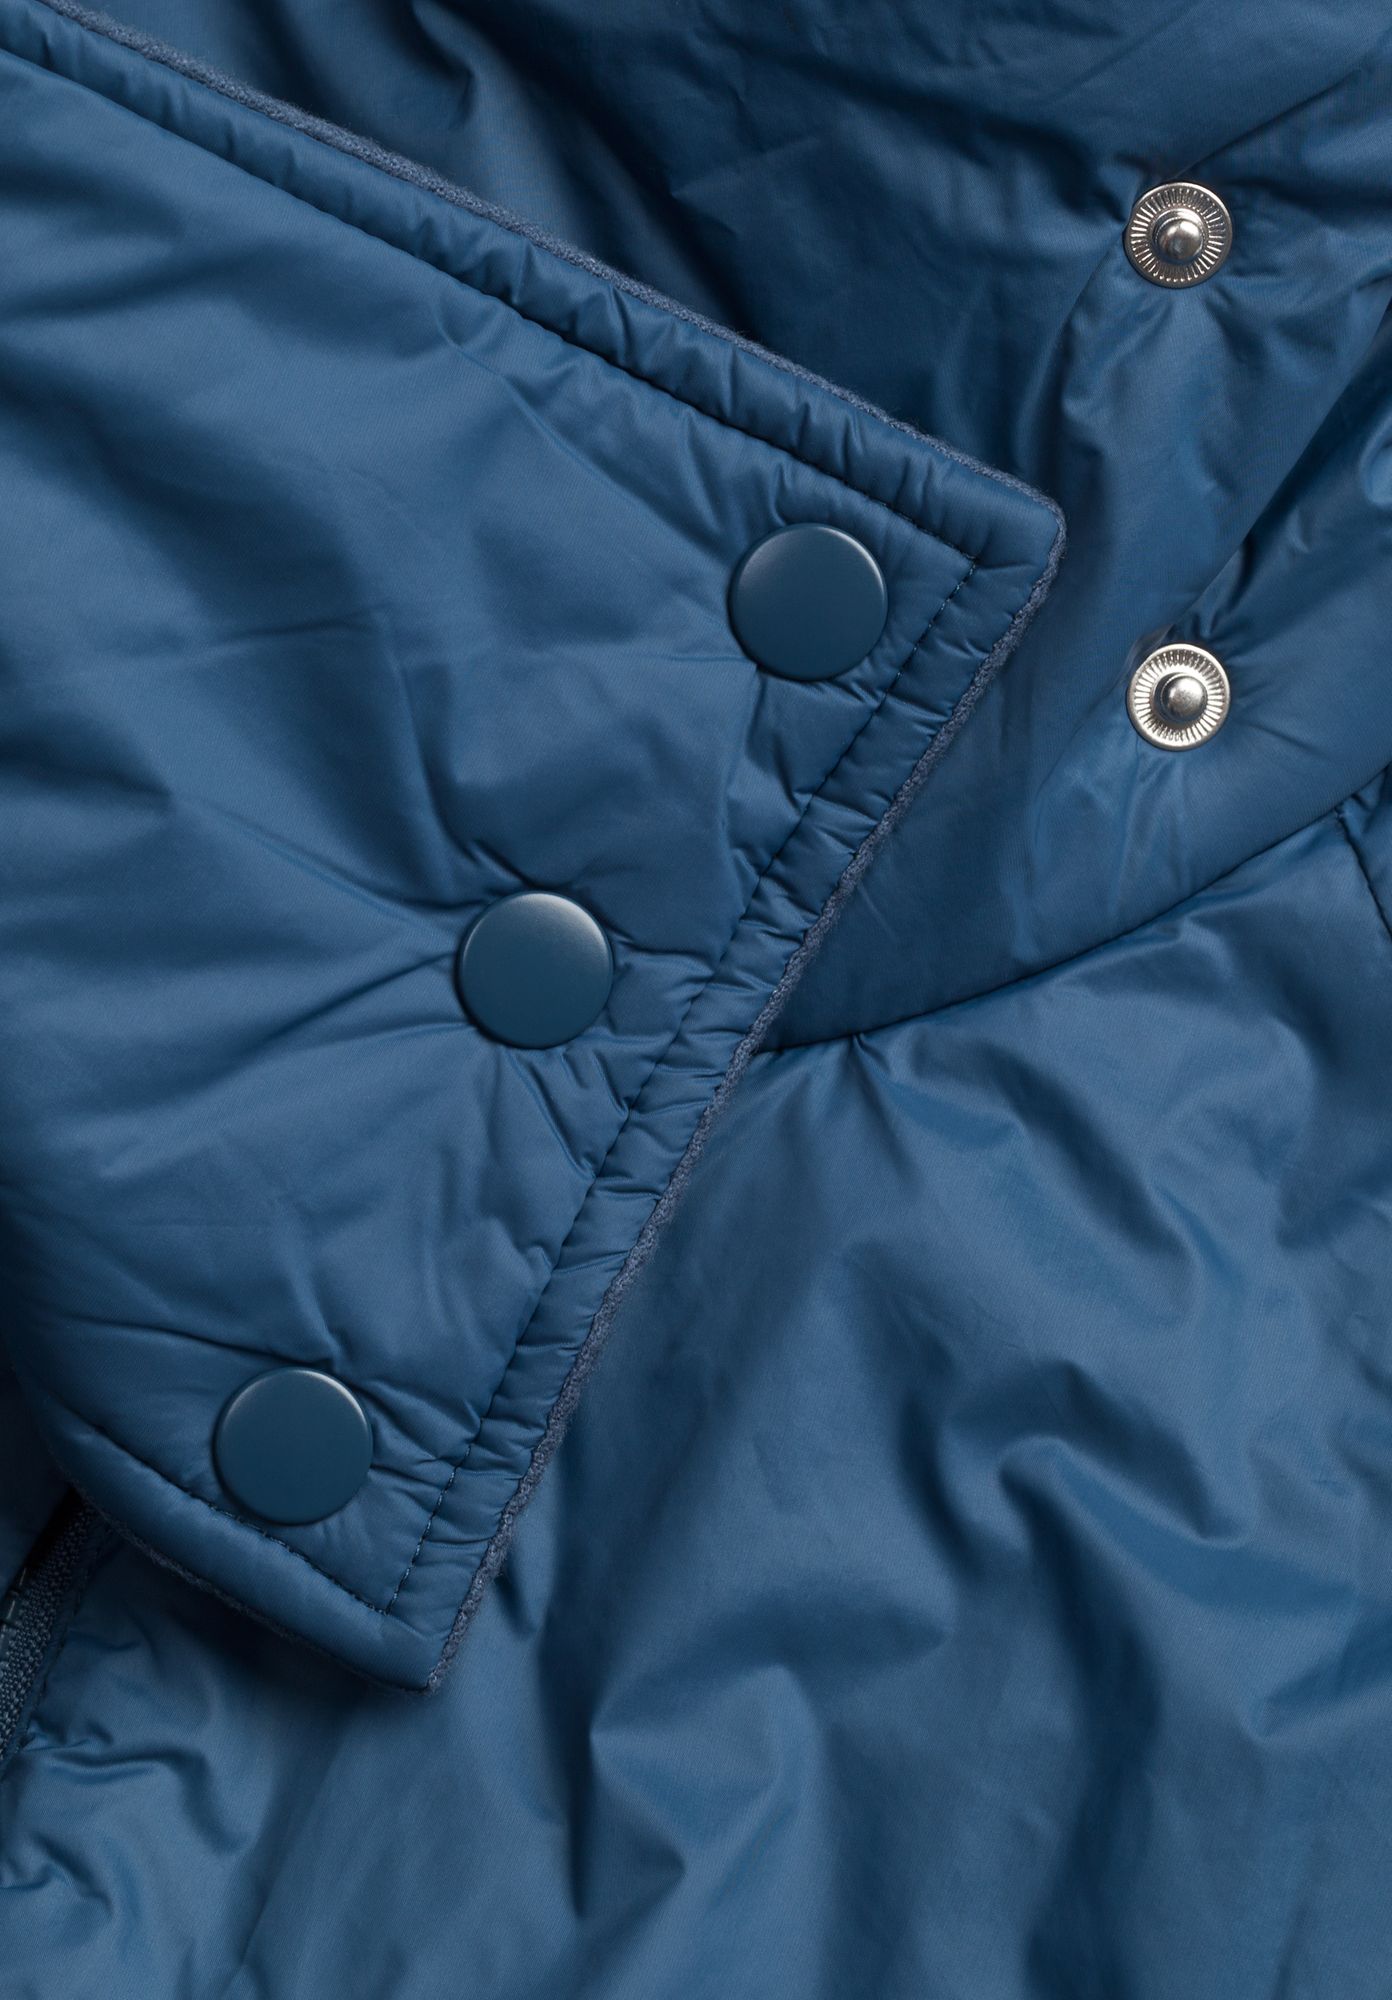 Blue jacket TT2014 made of kapok from Thokkthokk